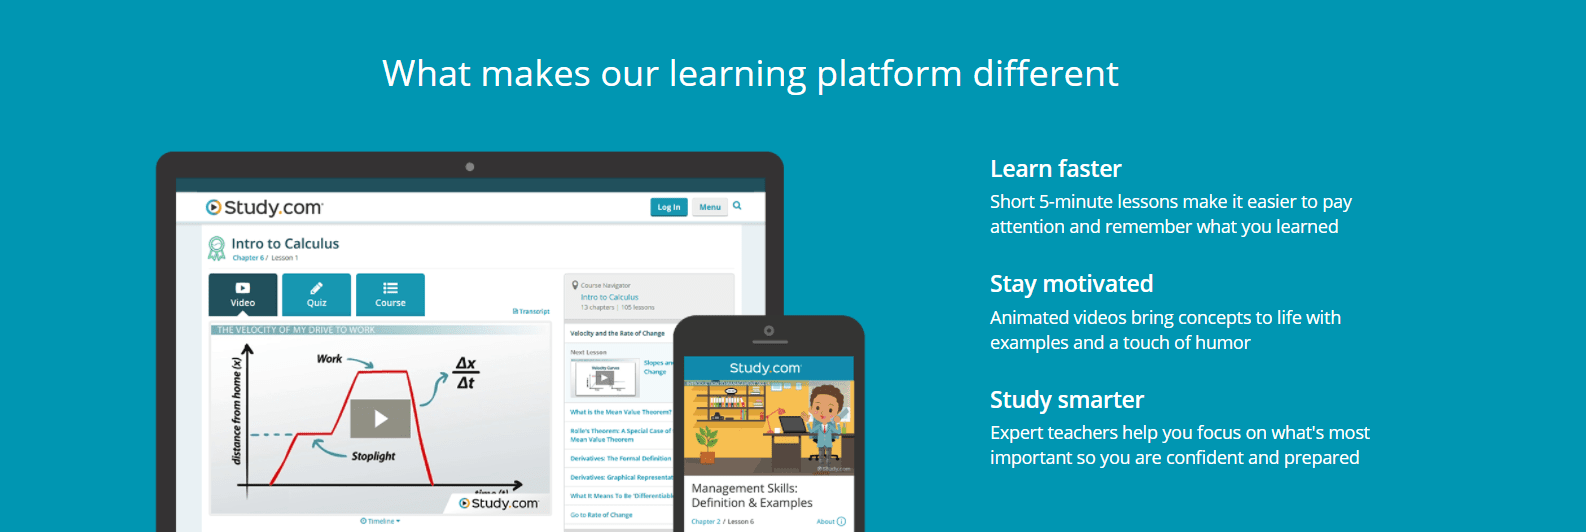 study.com learning platform different